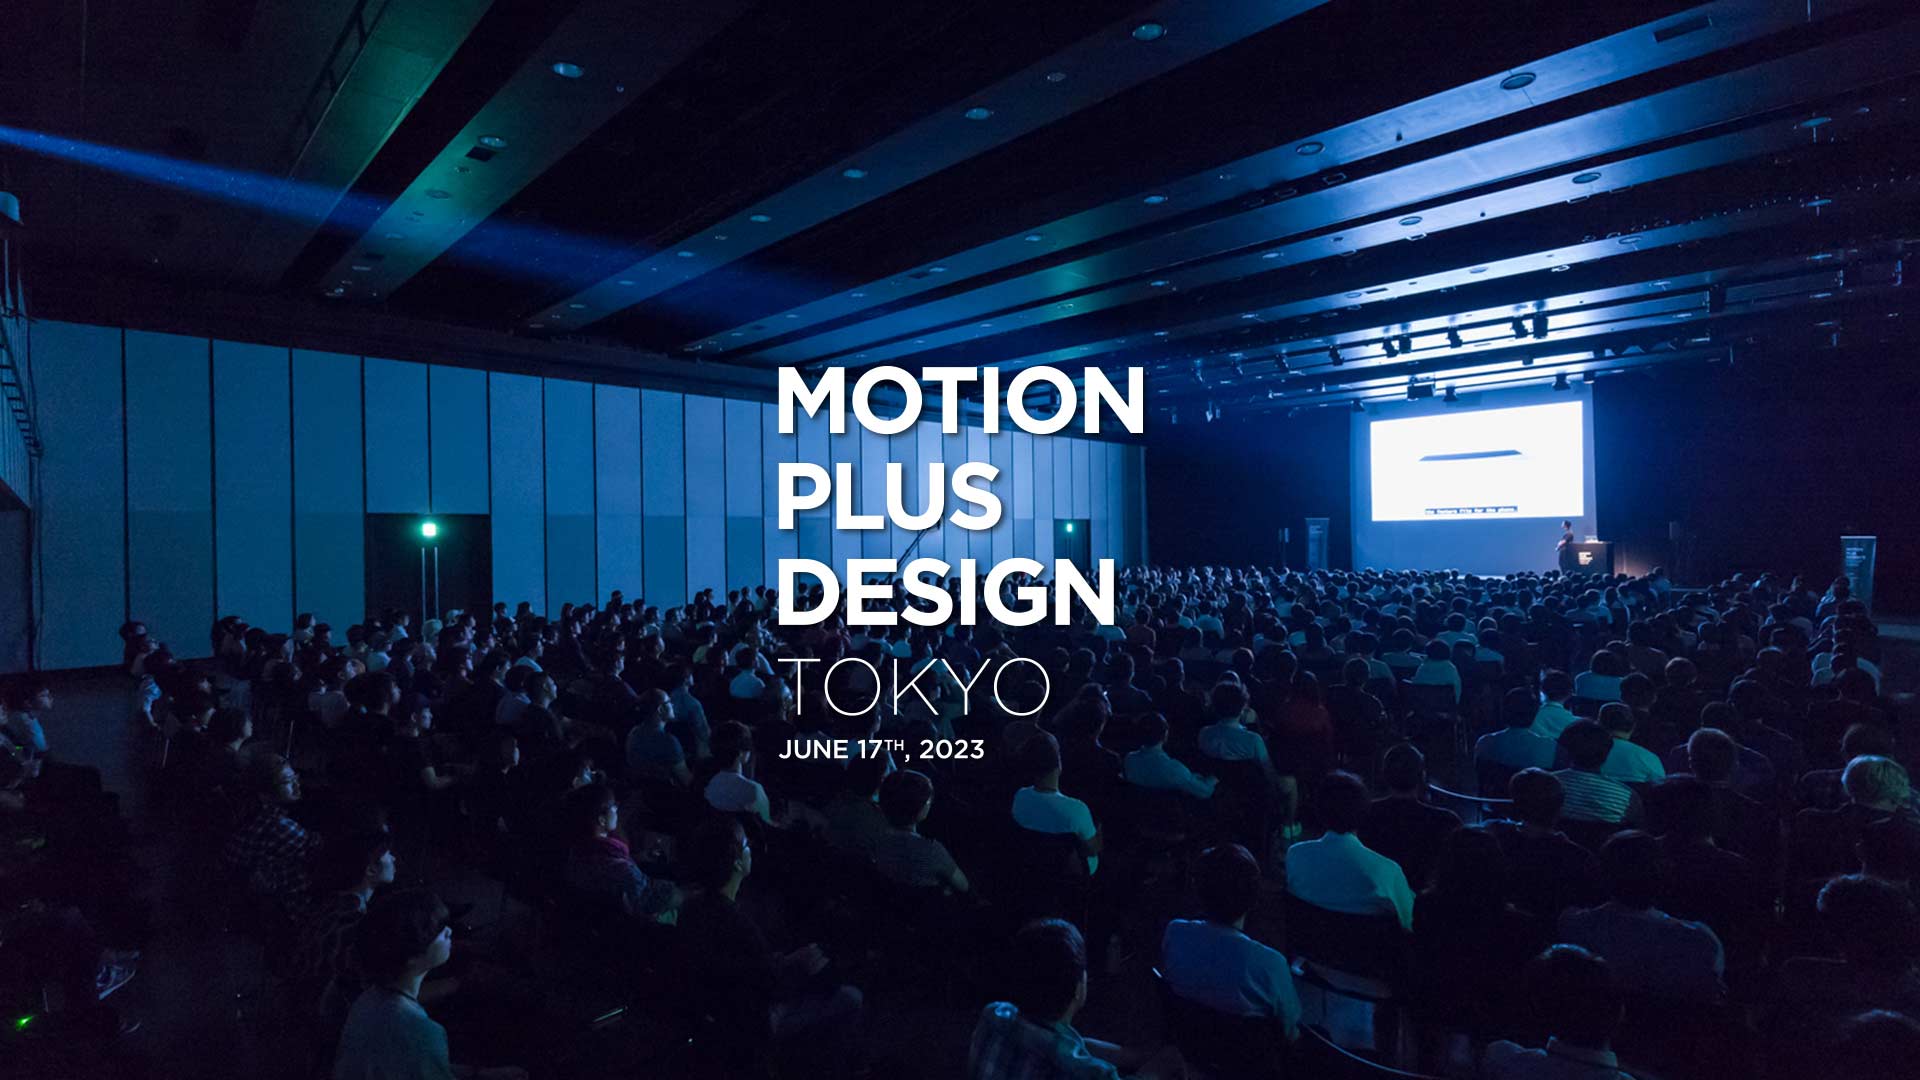 「Motion Plus Design Tokyo」にP.I.C.S.が協賛。